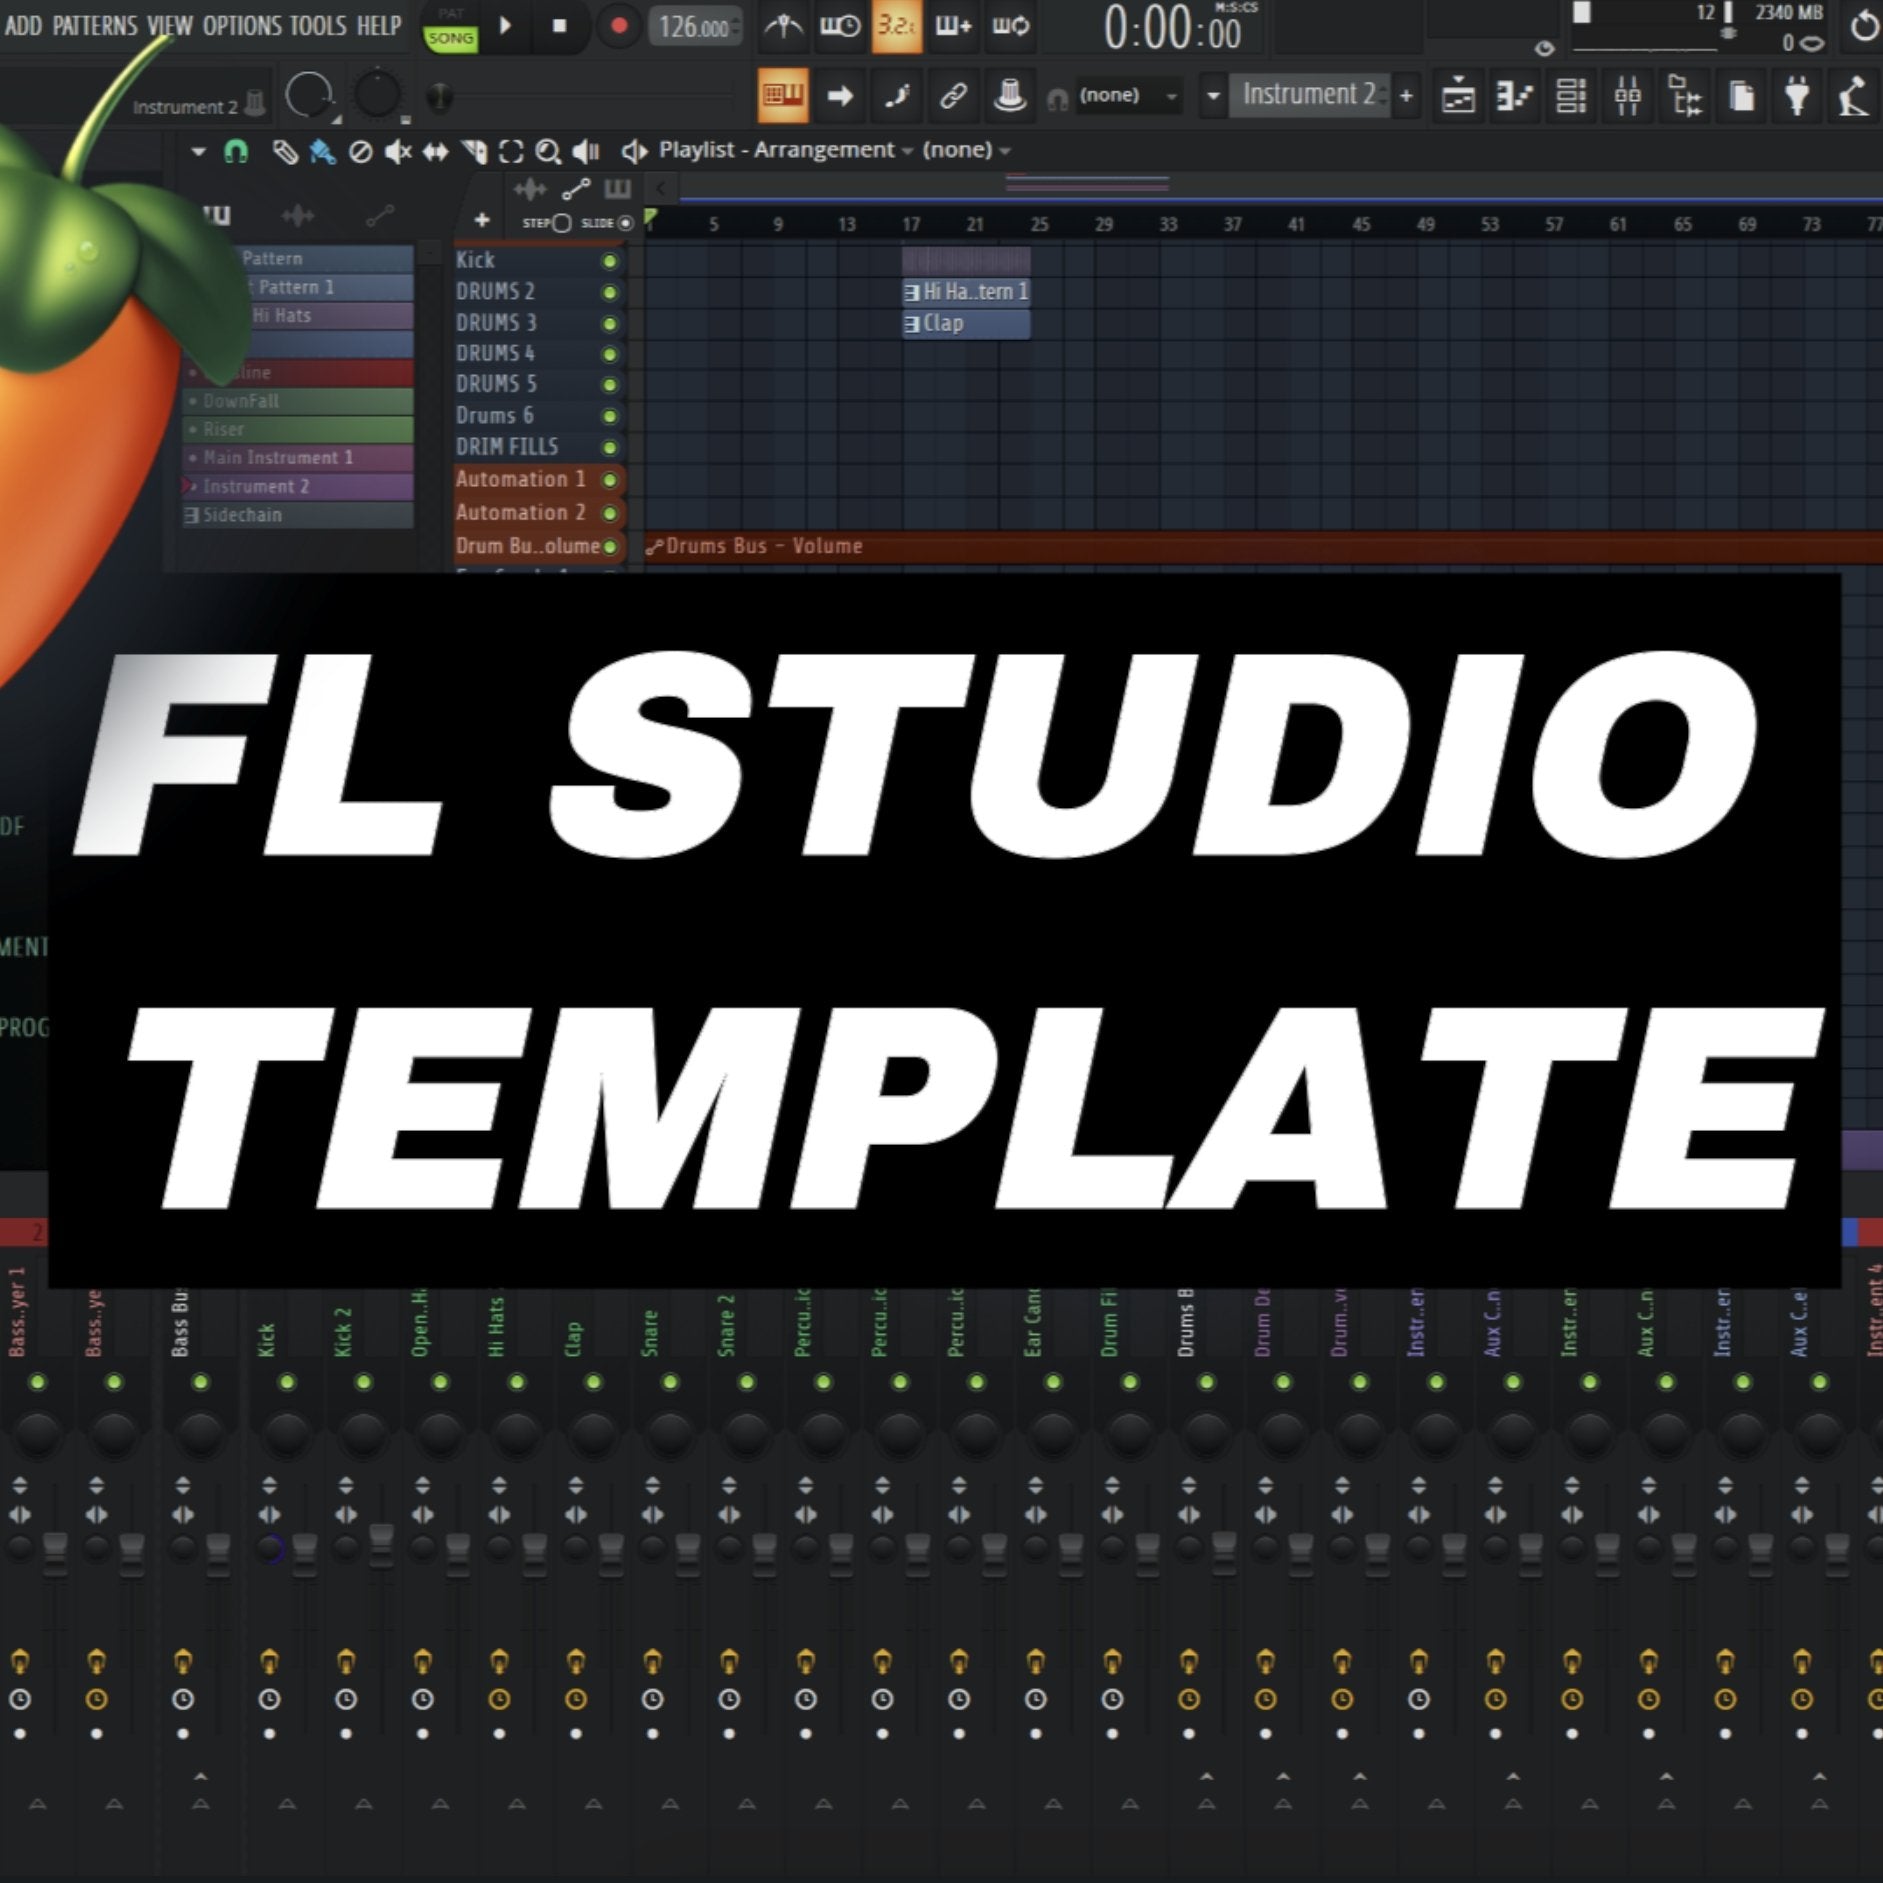 Tech House FL Studio Template - David Fritz - Scraps Audio